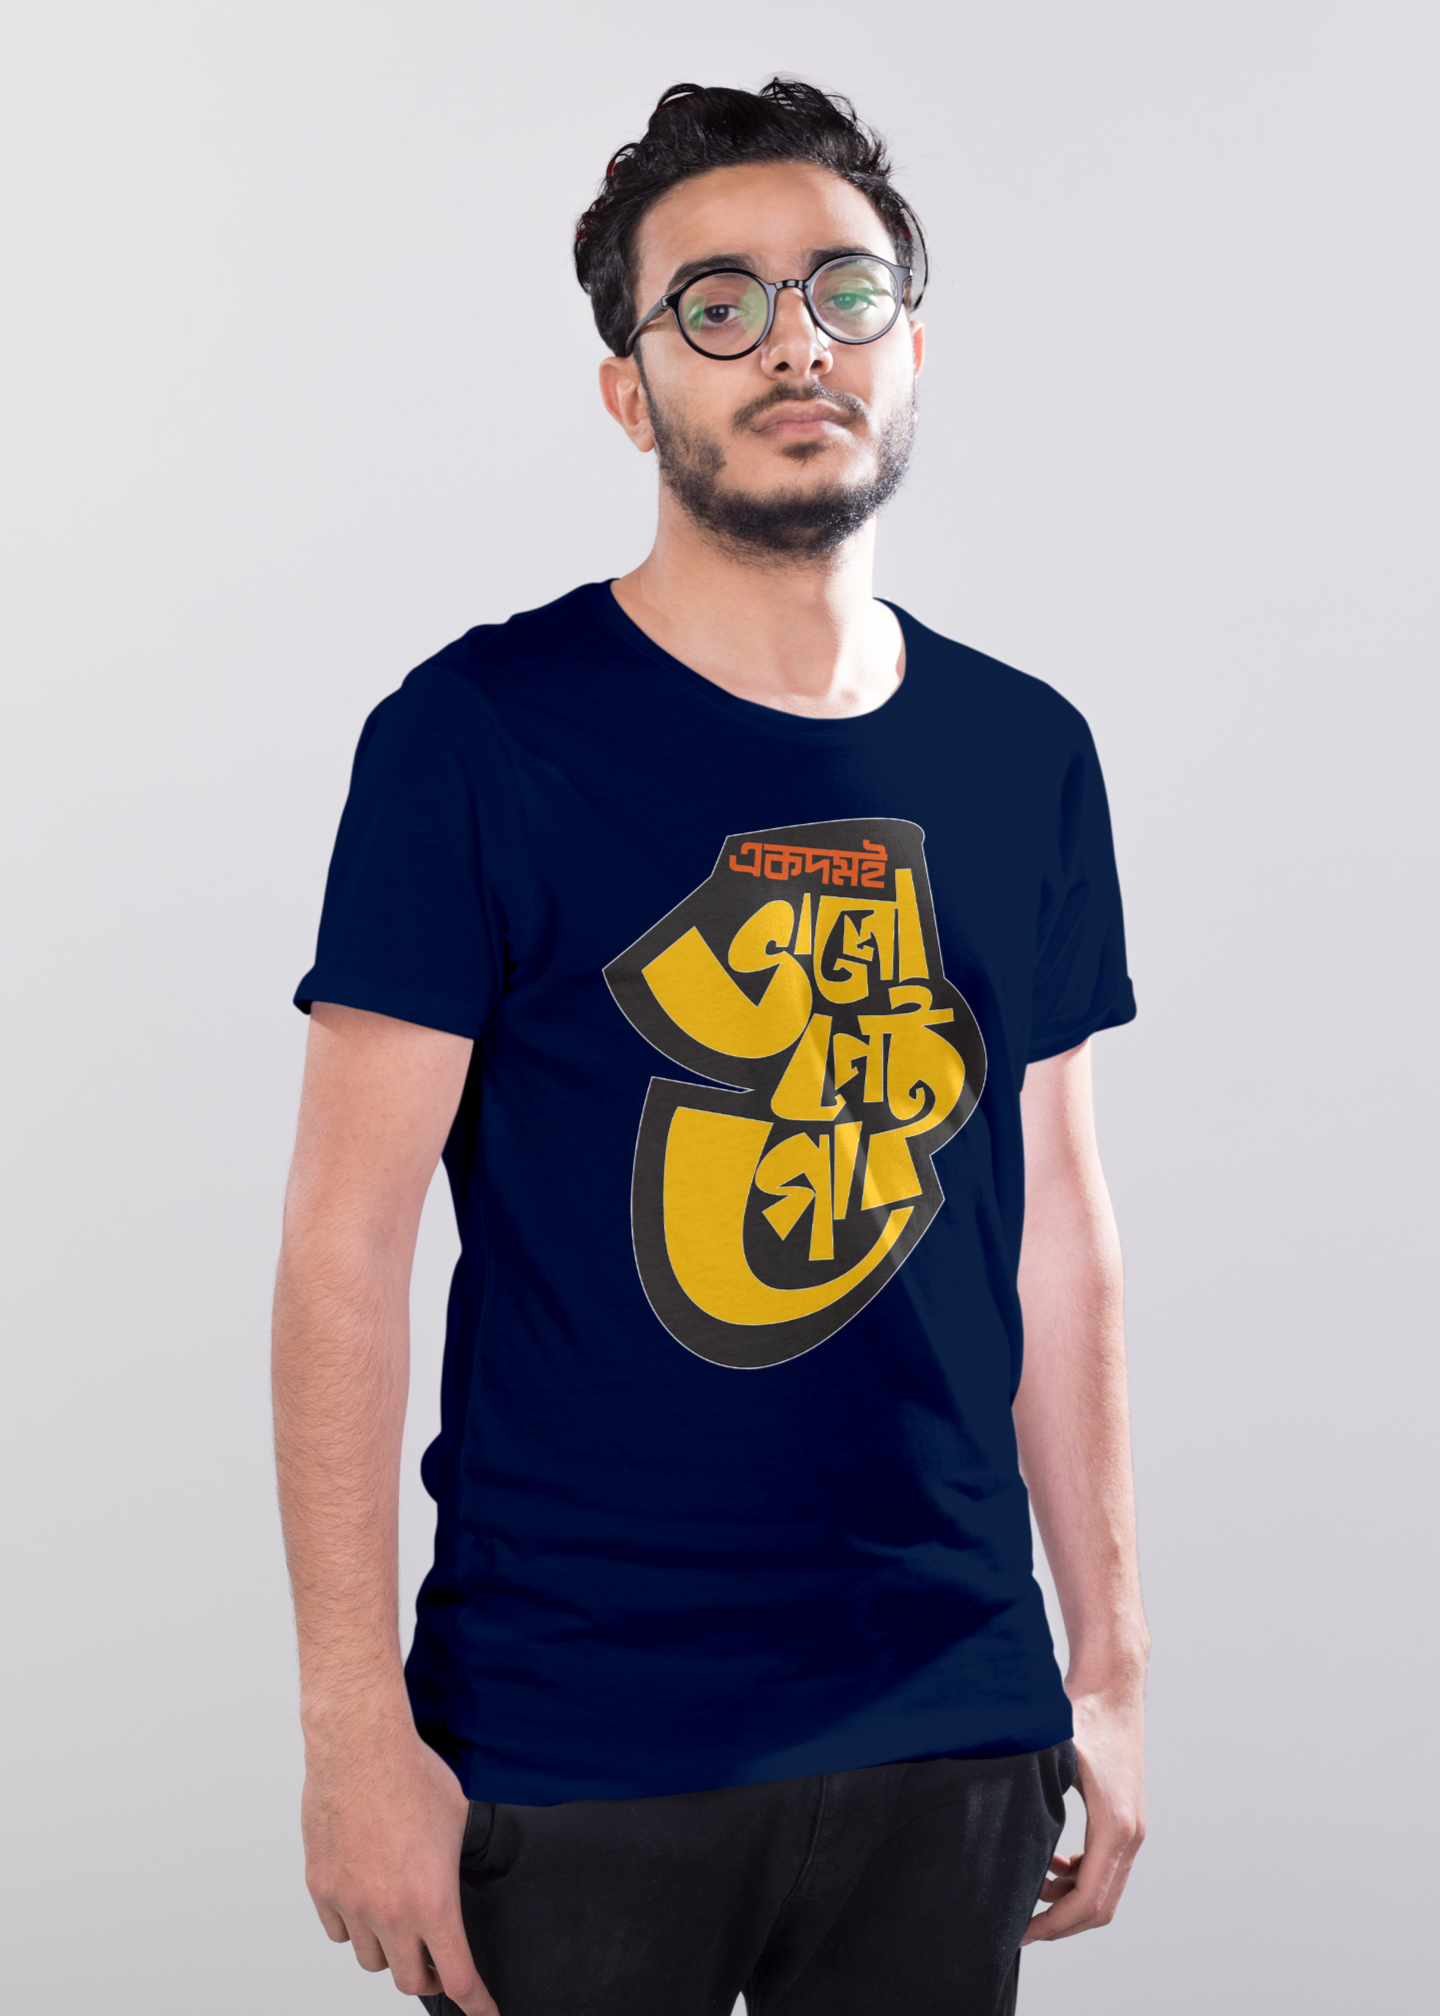 Bhalo nei go bengali Printed Half Sleeve Premium Cotton T-shirt For Men